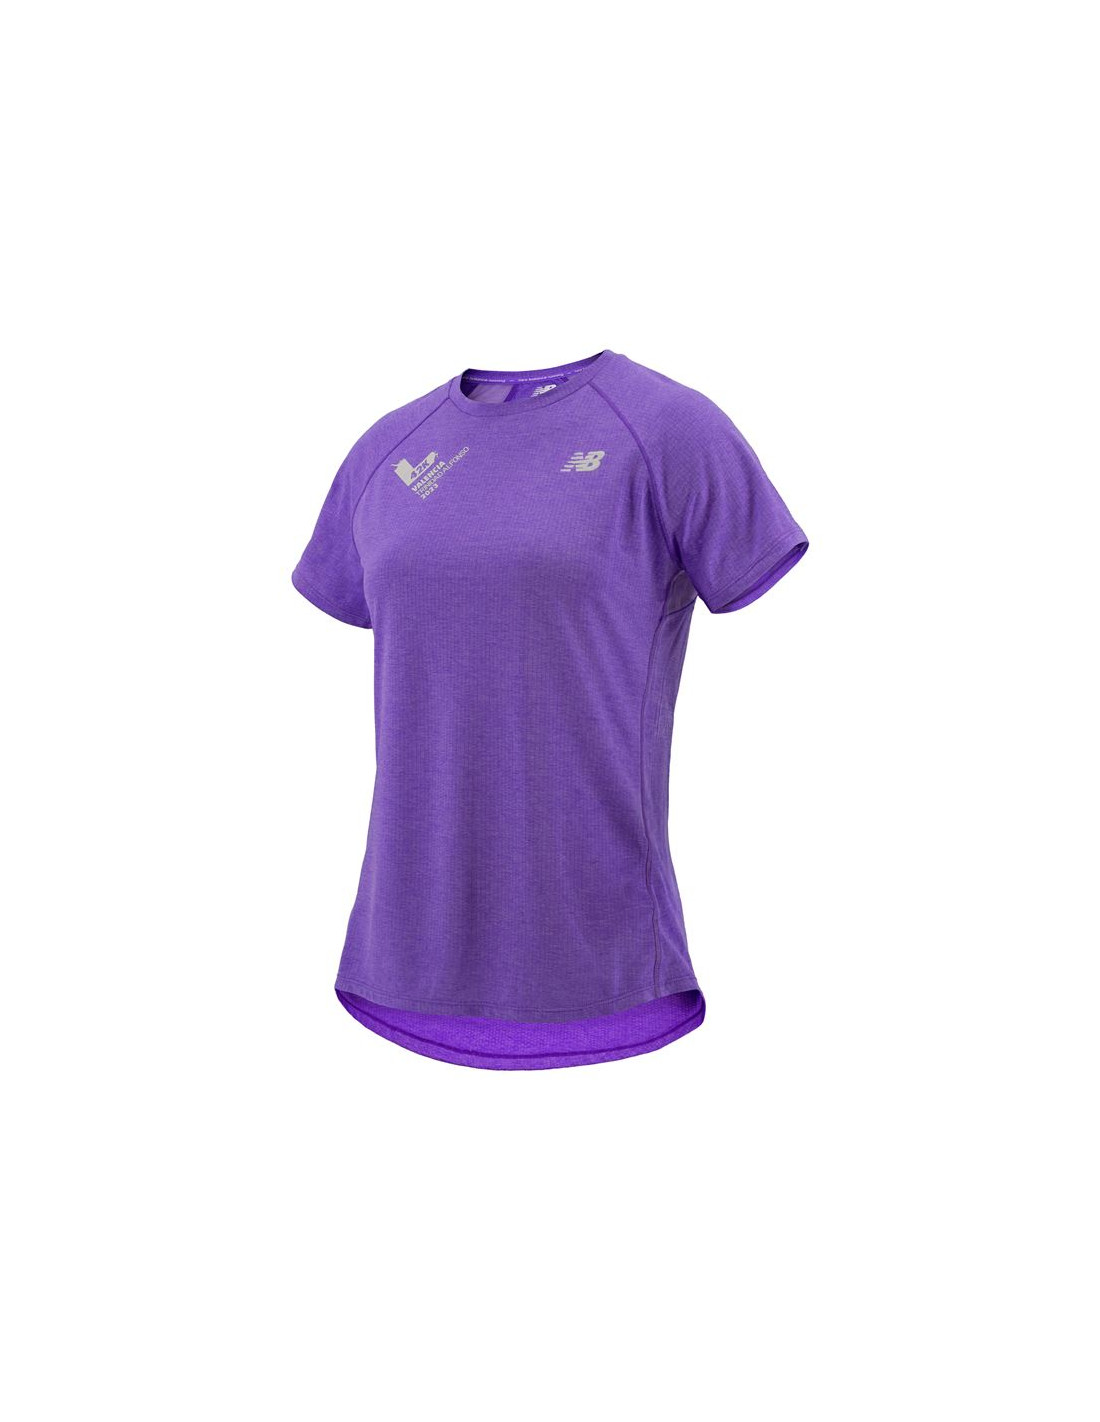 https://media.atmosferasport.es/315490-thickbox_default/t-shirt-running-new-balance-valencia-marathon-impact-run-eih-woman.jpg